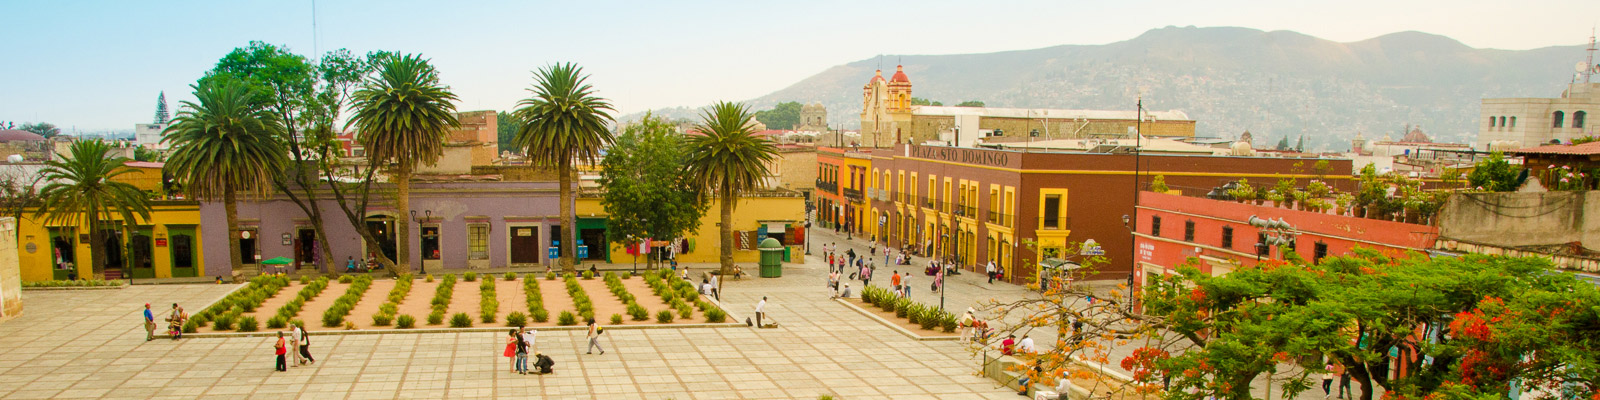 Mexico Oaxaca And Chiapas Travel Tour Vacation